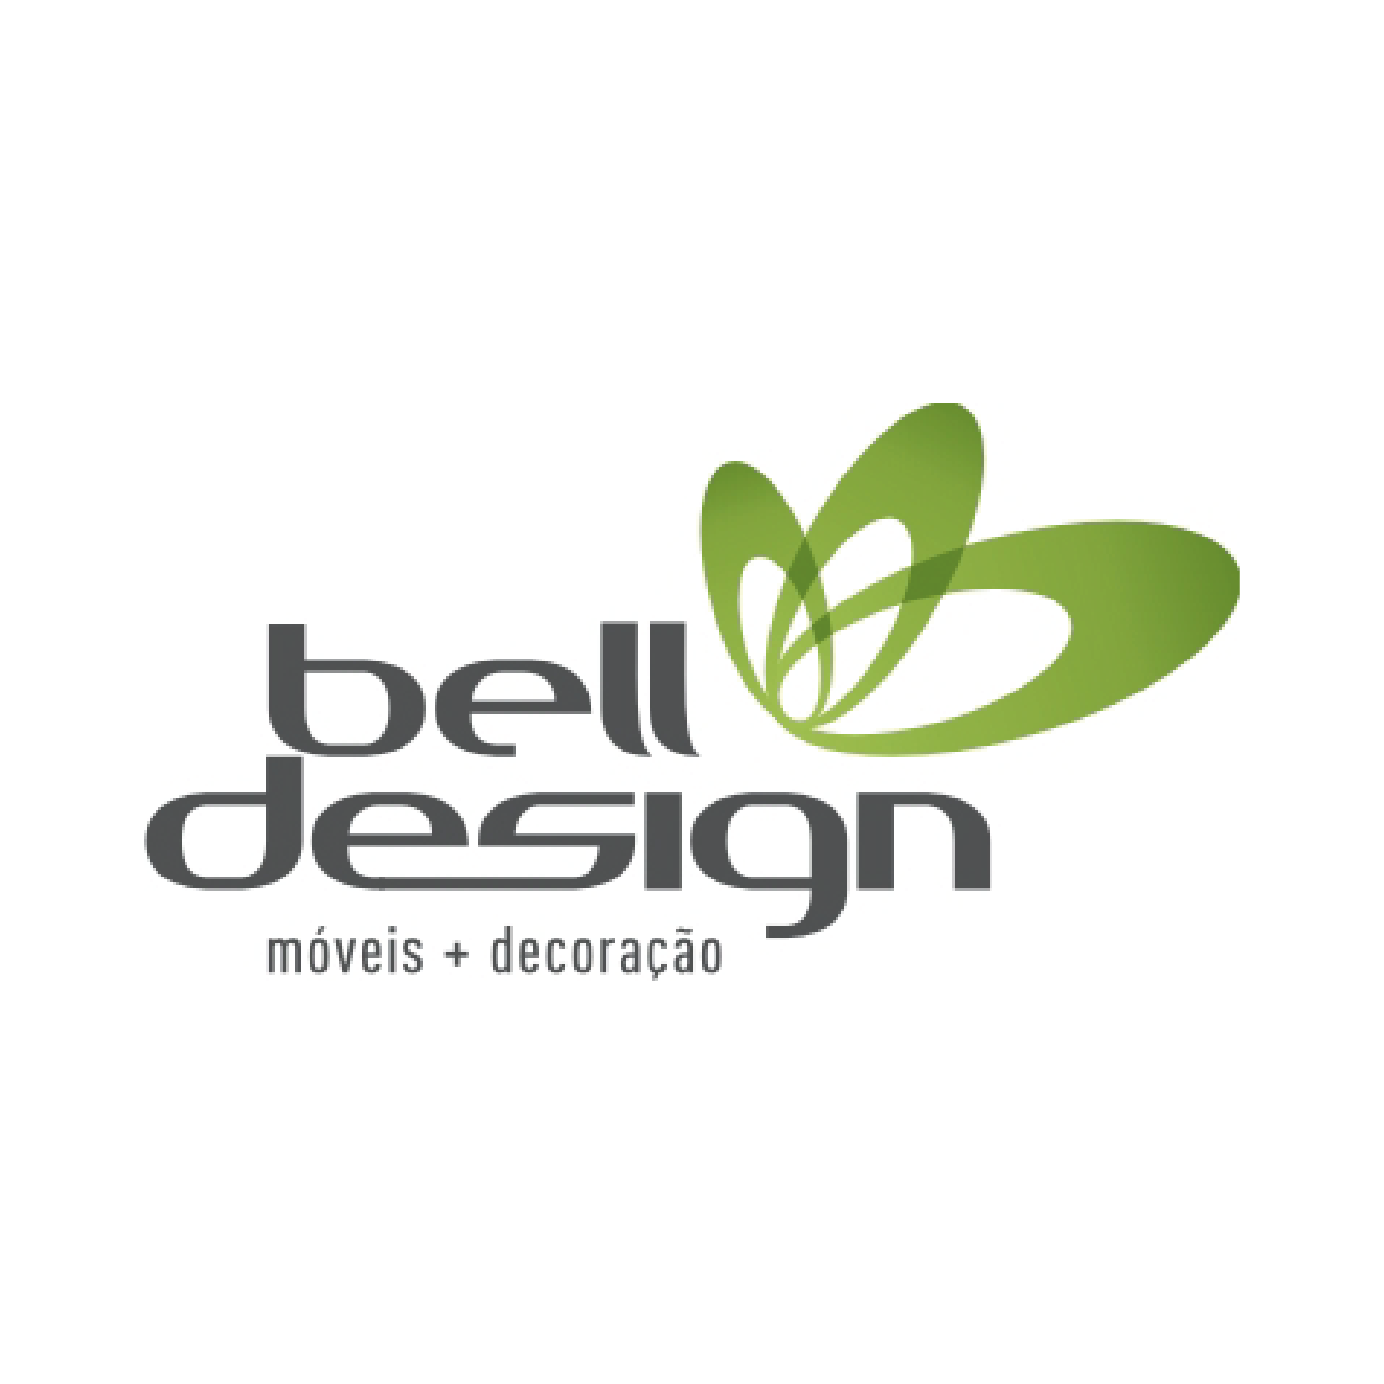 Bell Design